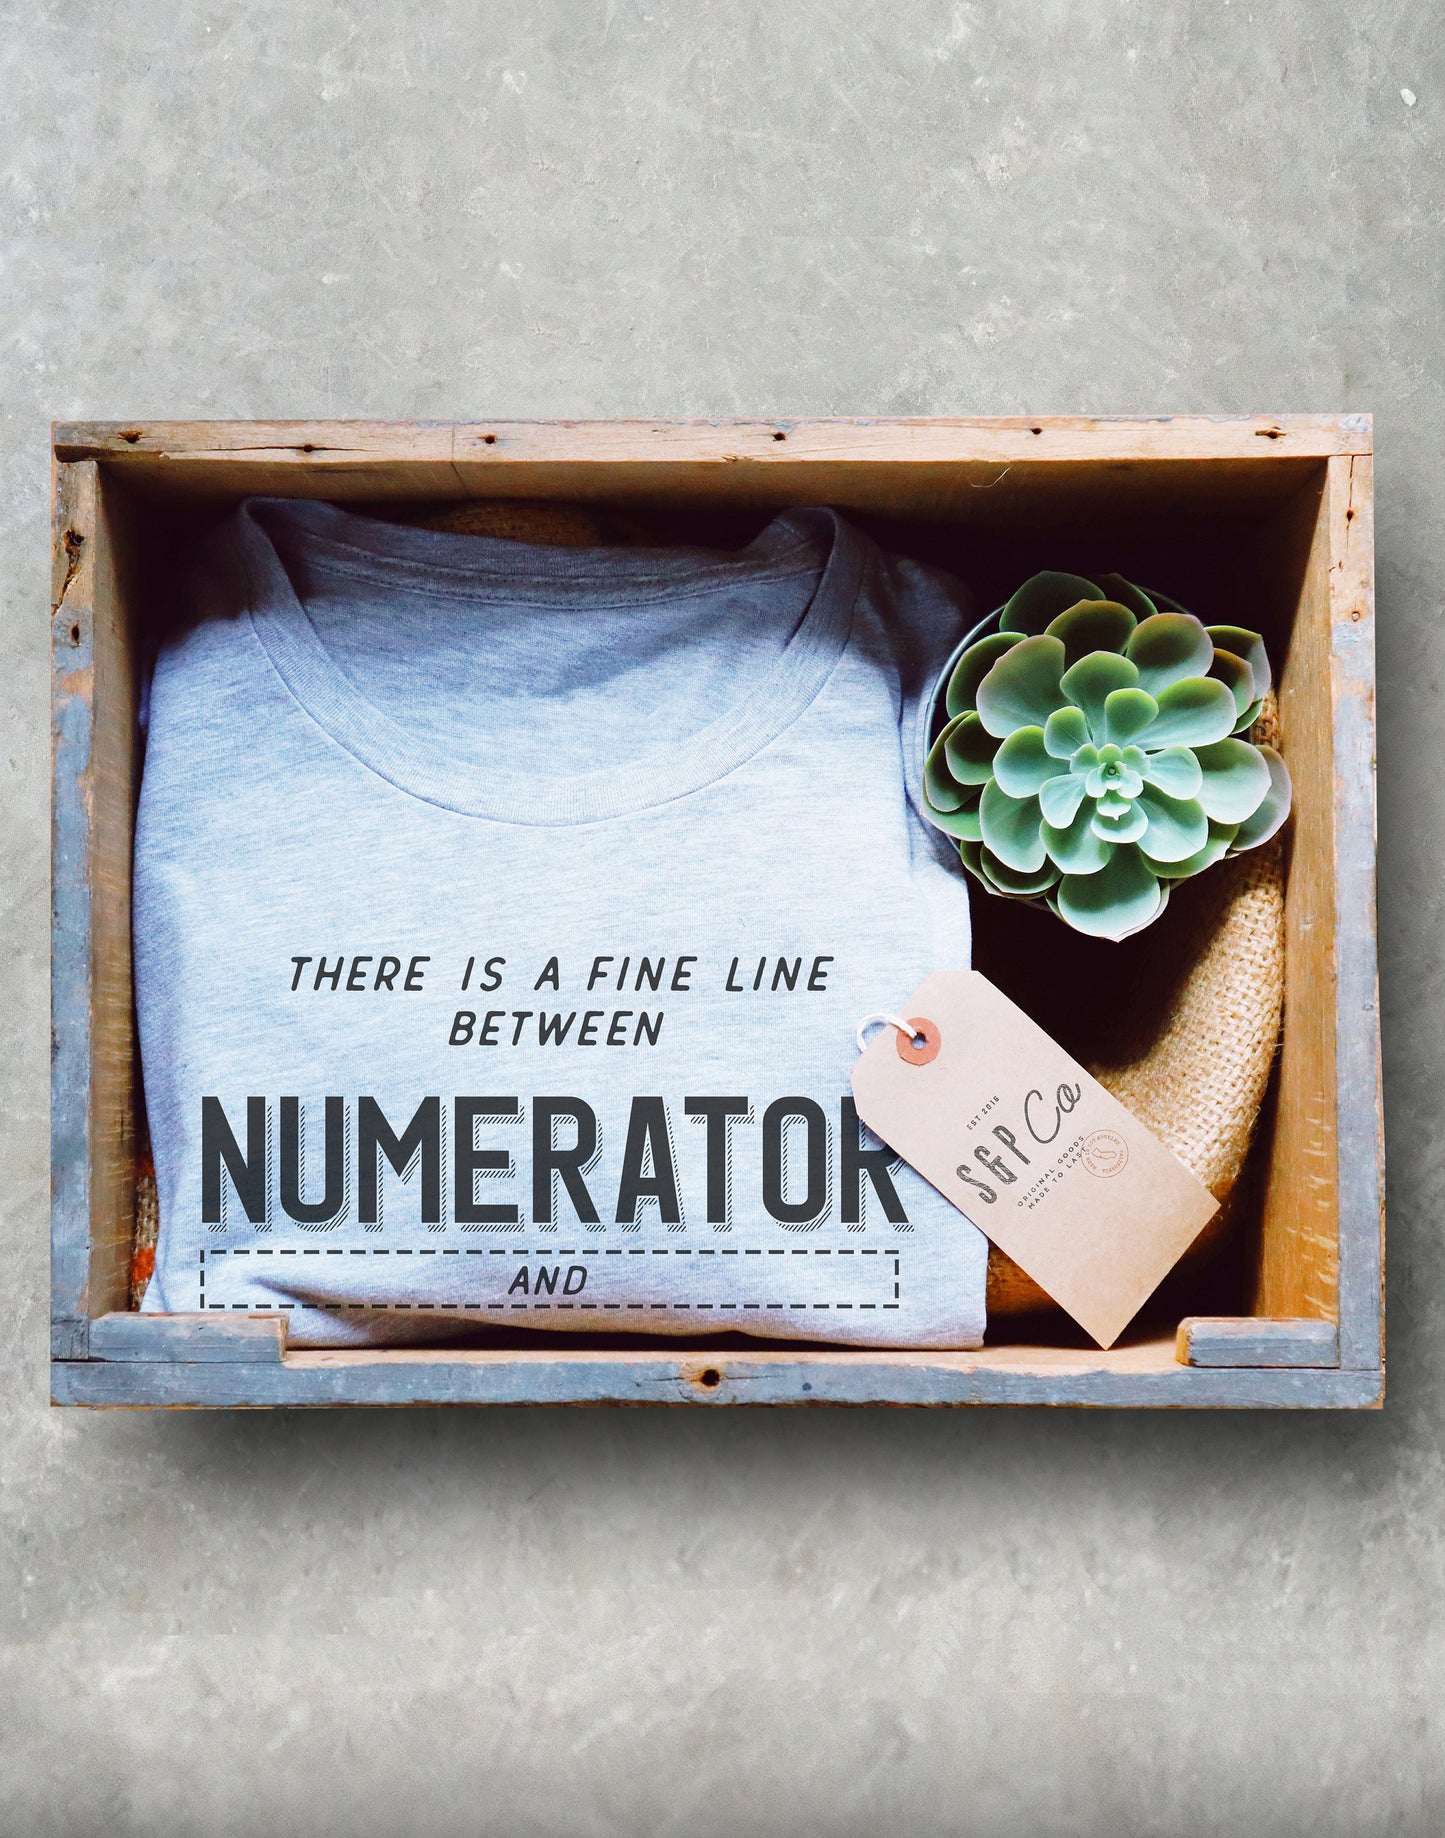 Numerator And Denominator Unisex Shirt - Math funny t-shirt, Funny math shirt, Math geek shirts, Math teacher tee, Mathematics, Math shirt